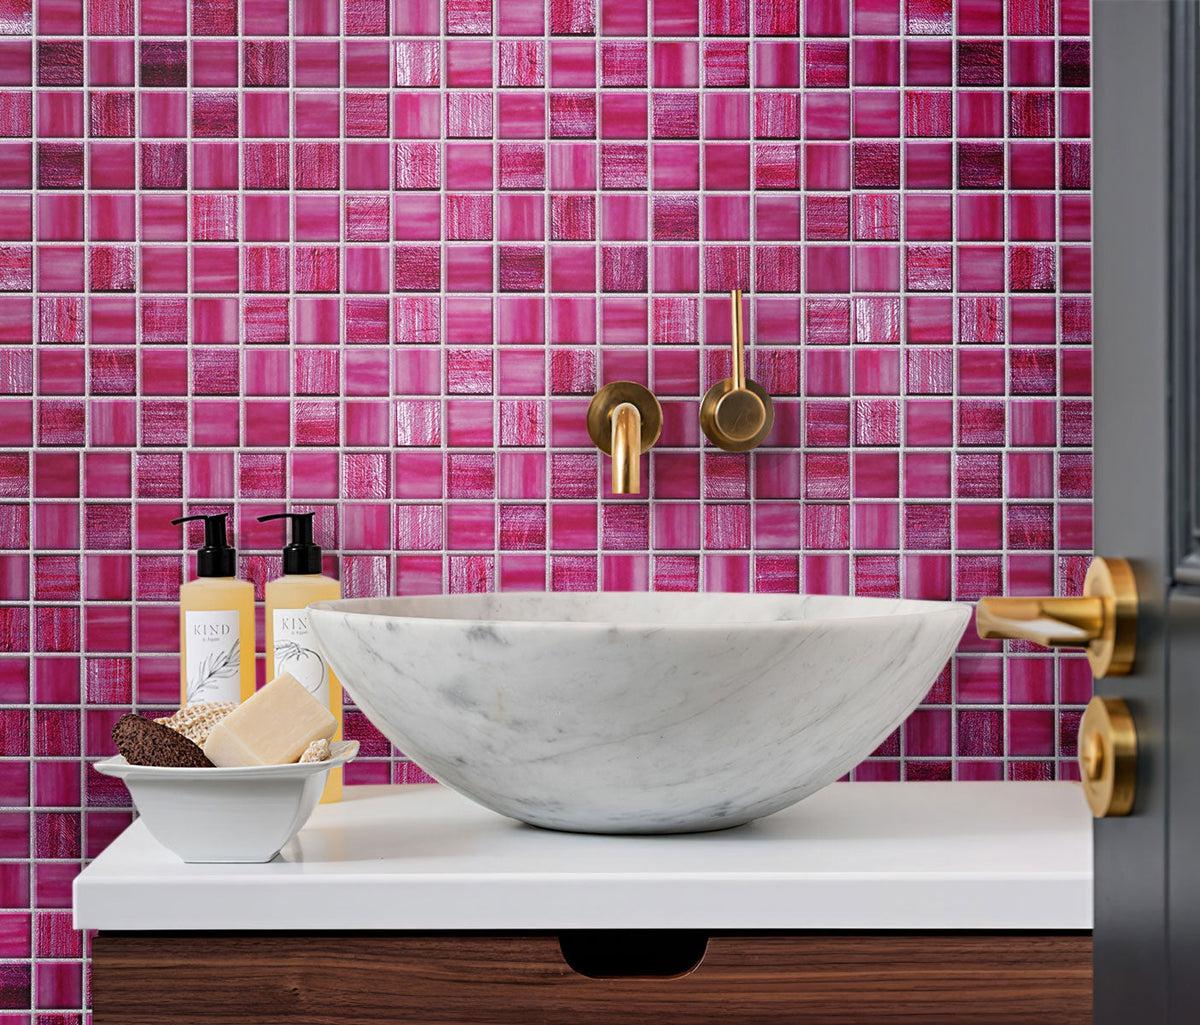 Pink glass tile bathroom backsplash wall